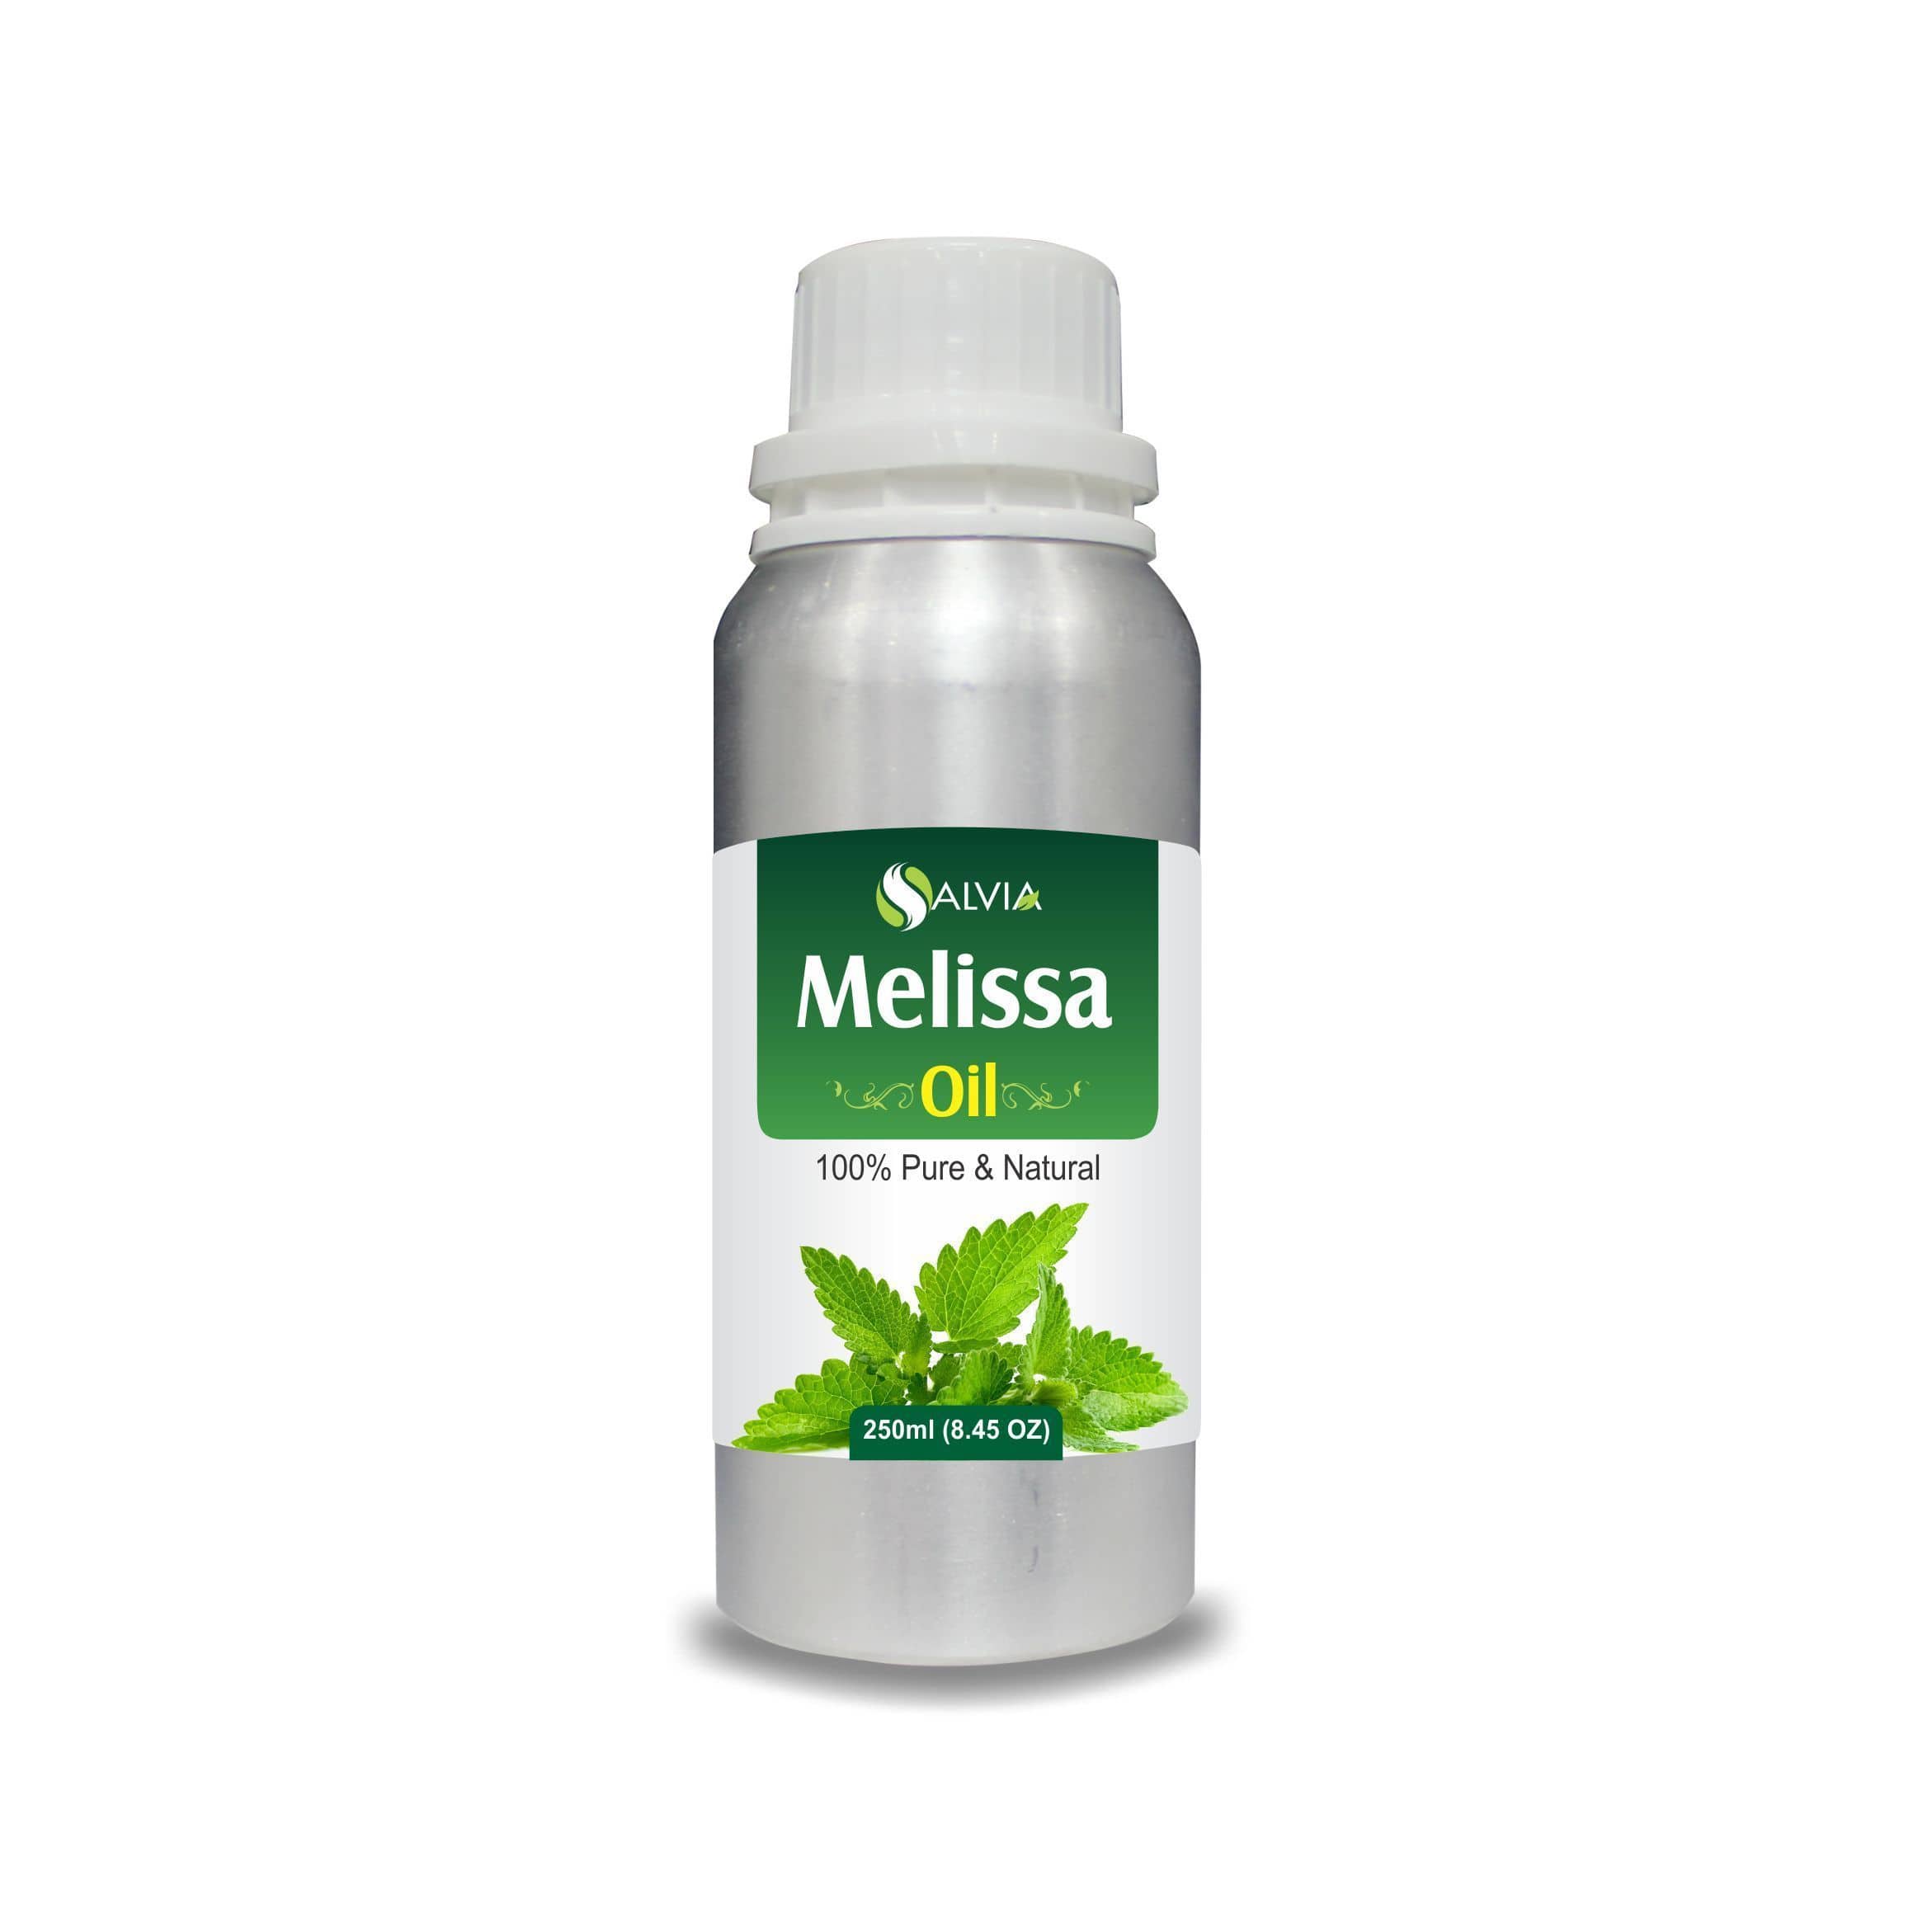 melissa oil skin benefits